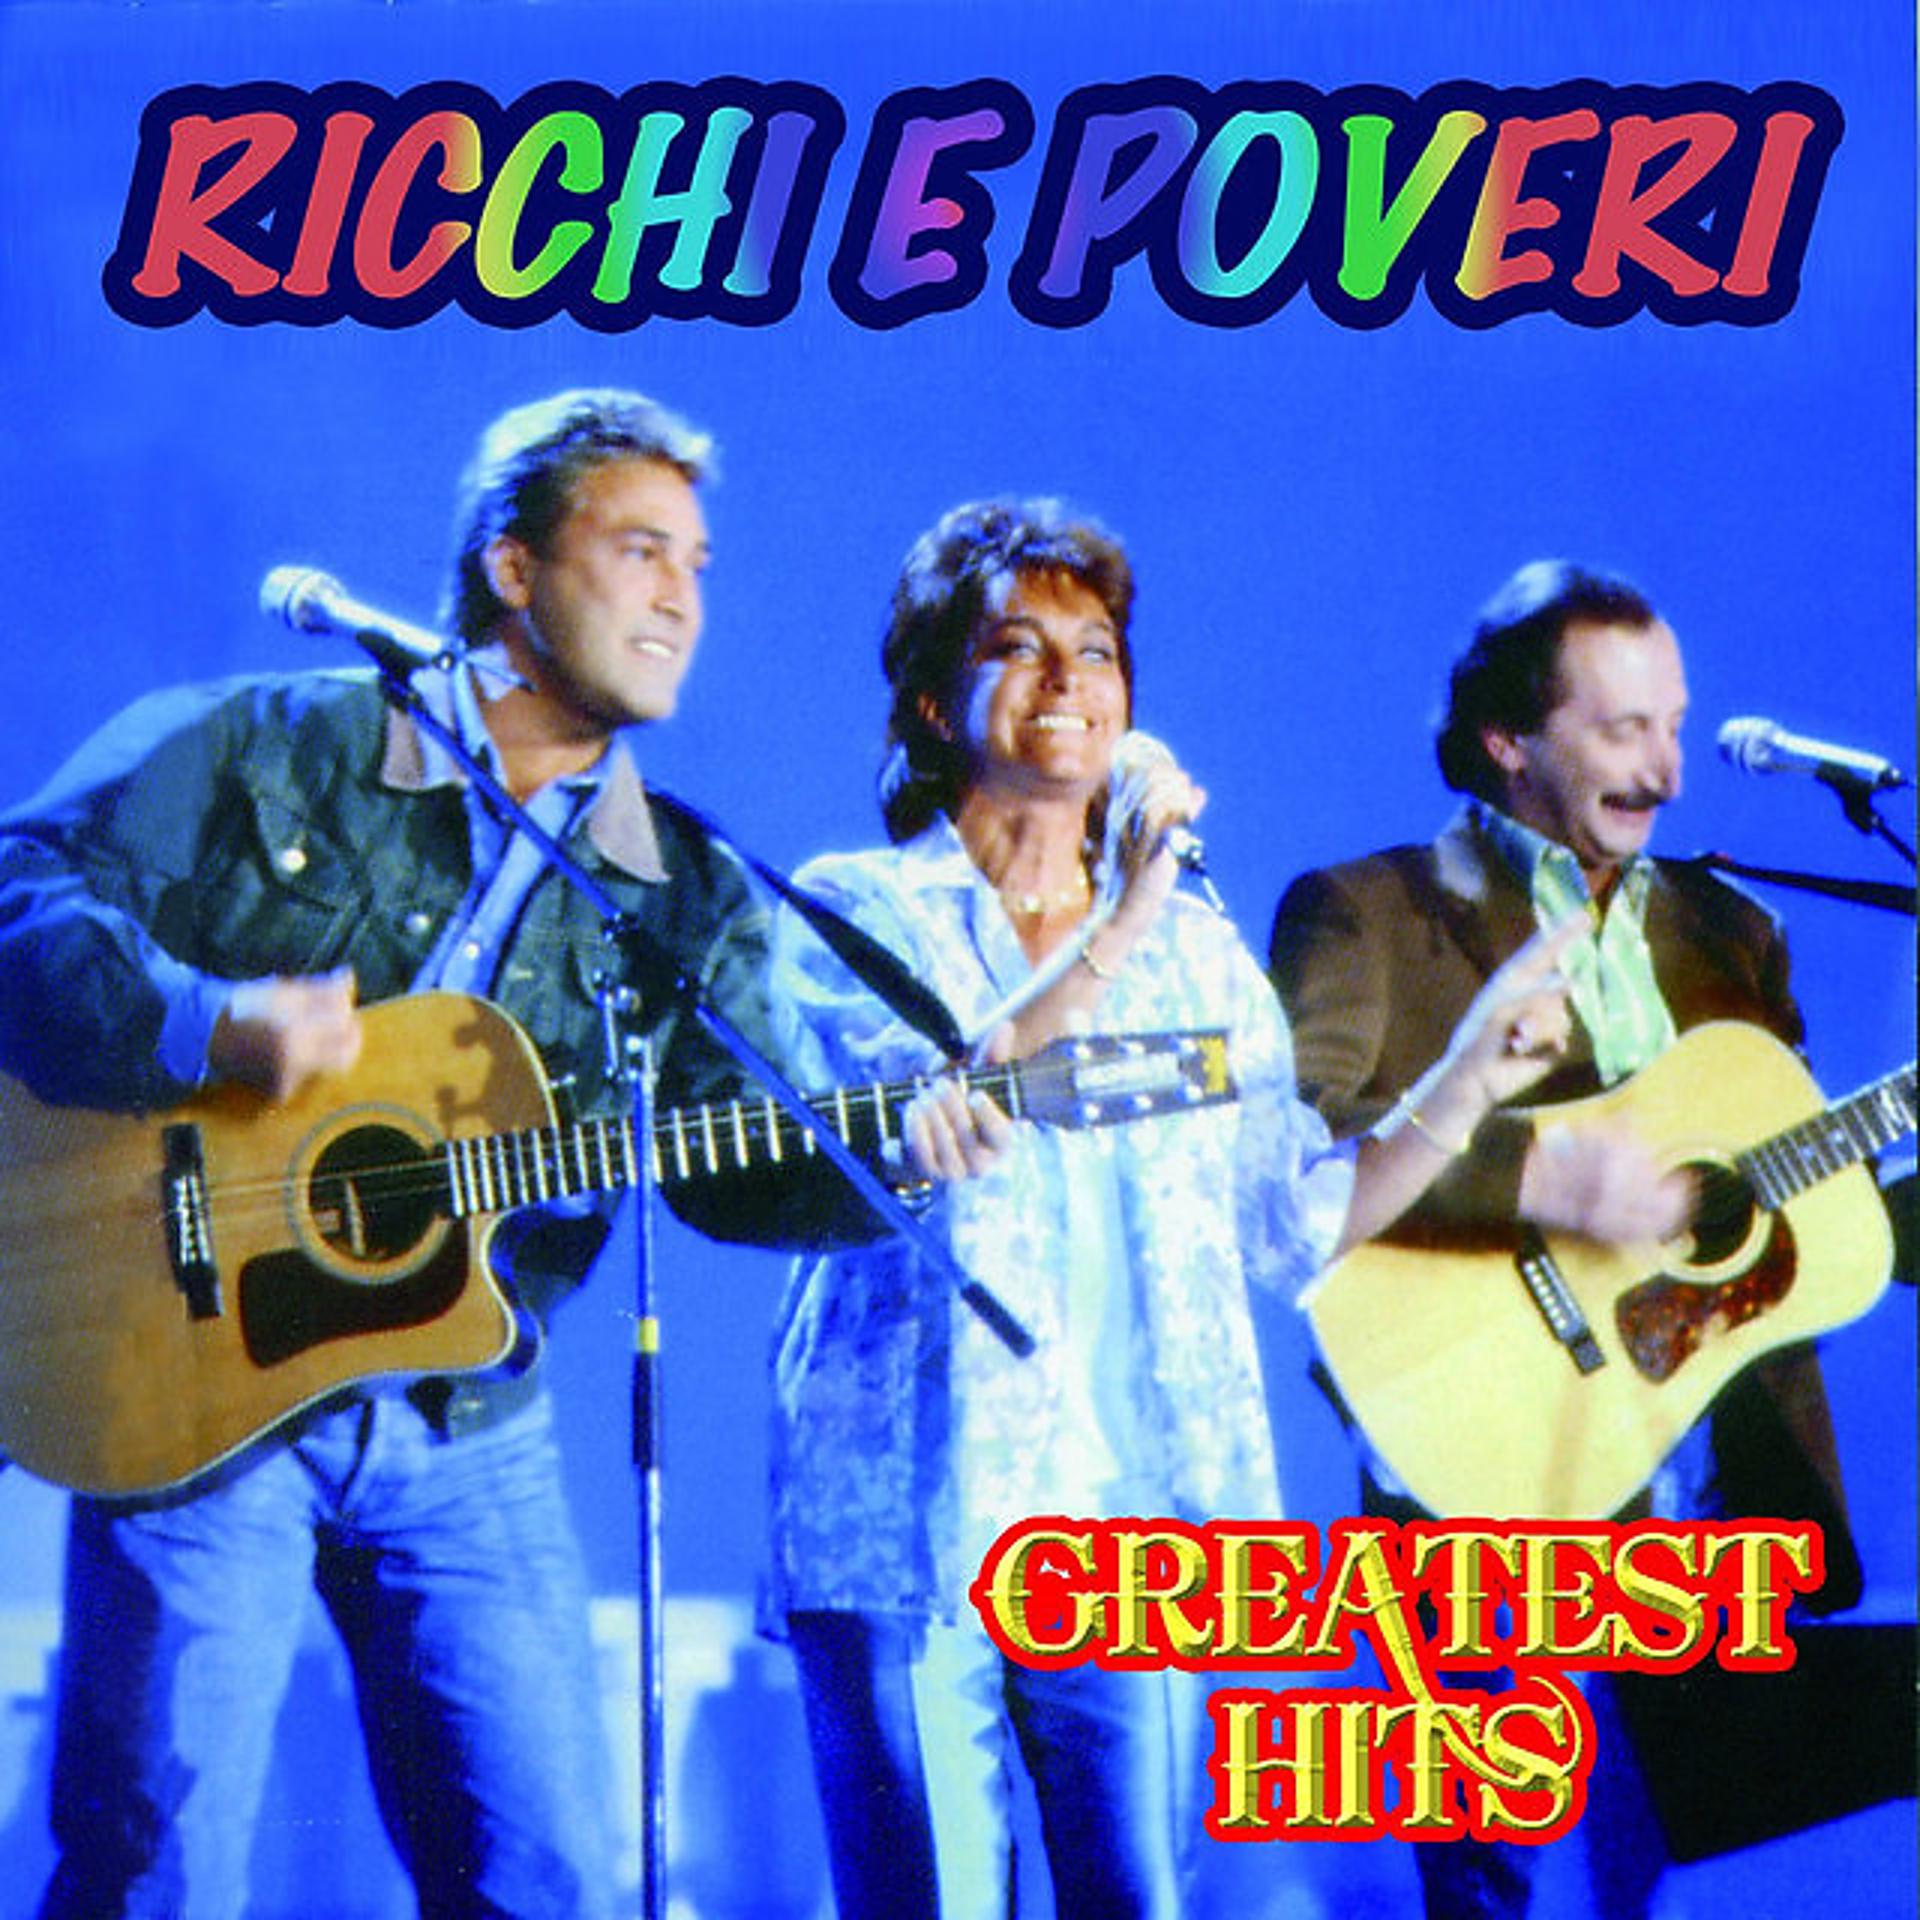 Greatest Hits Ricchi e Poveri. Ricchi e Poveri 2009 Greatest Hits. Обложка Ricchi e Poveri - Sarà perchè ti amo. Ricchi e Poveri - Greatest Hits (2cd). Песни рикки э